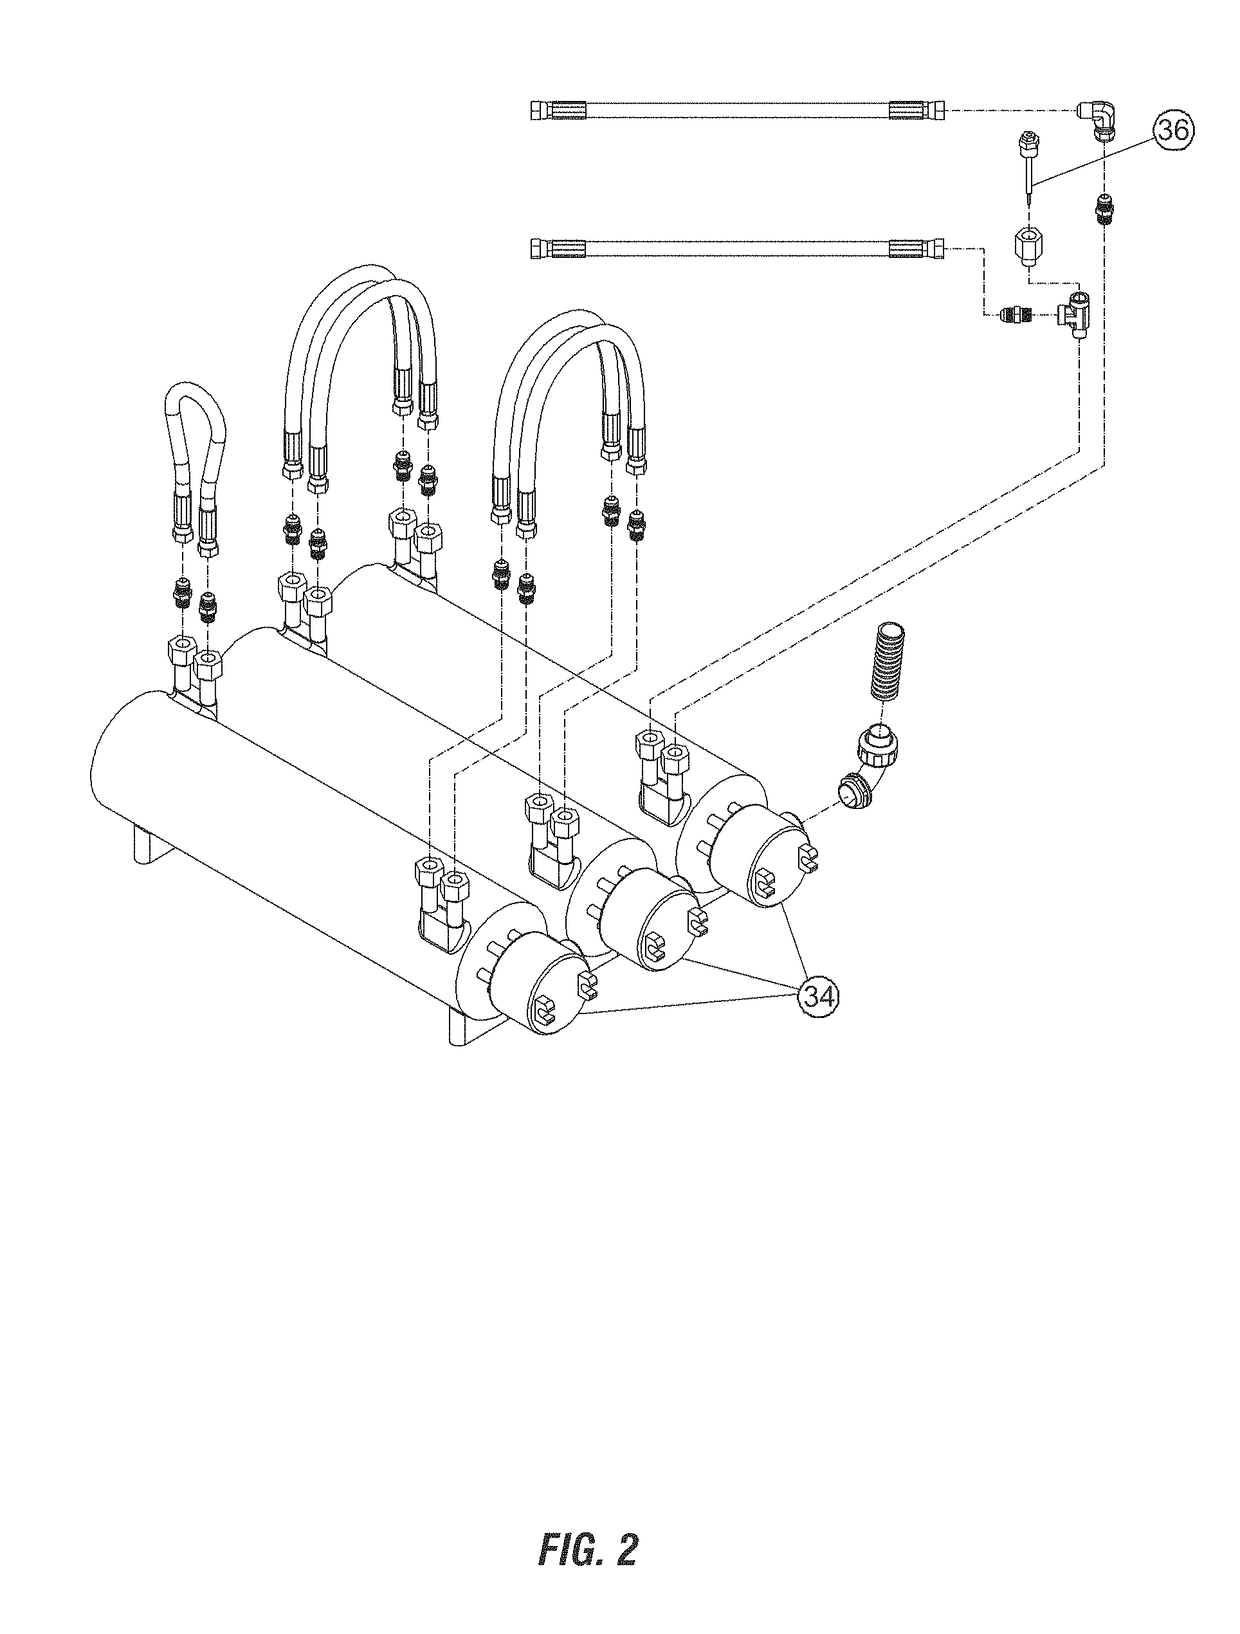 Electric cartridge style pressure washer heater module